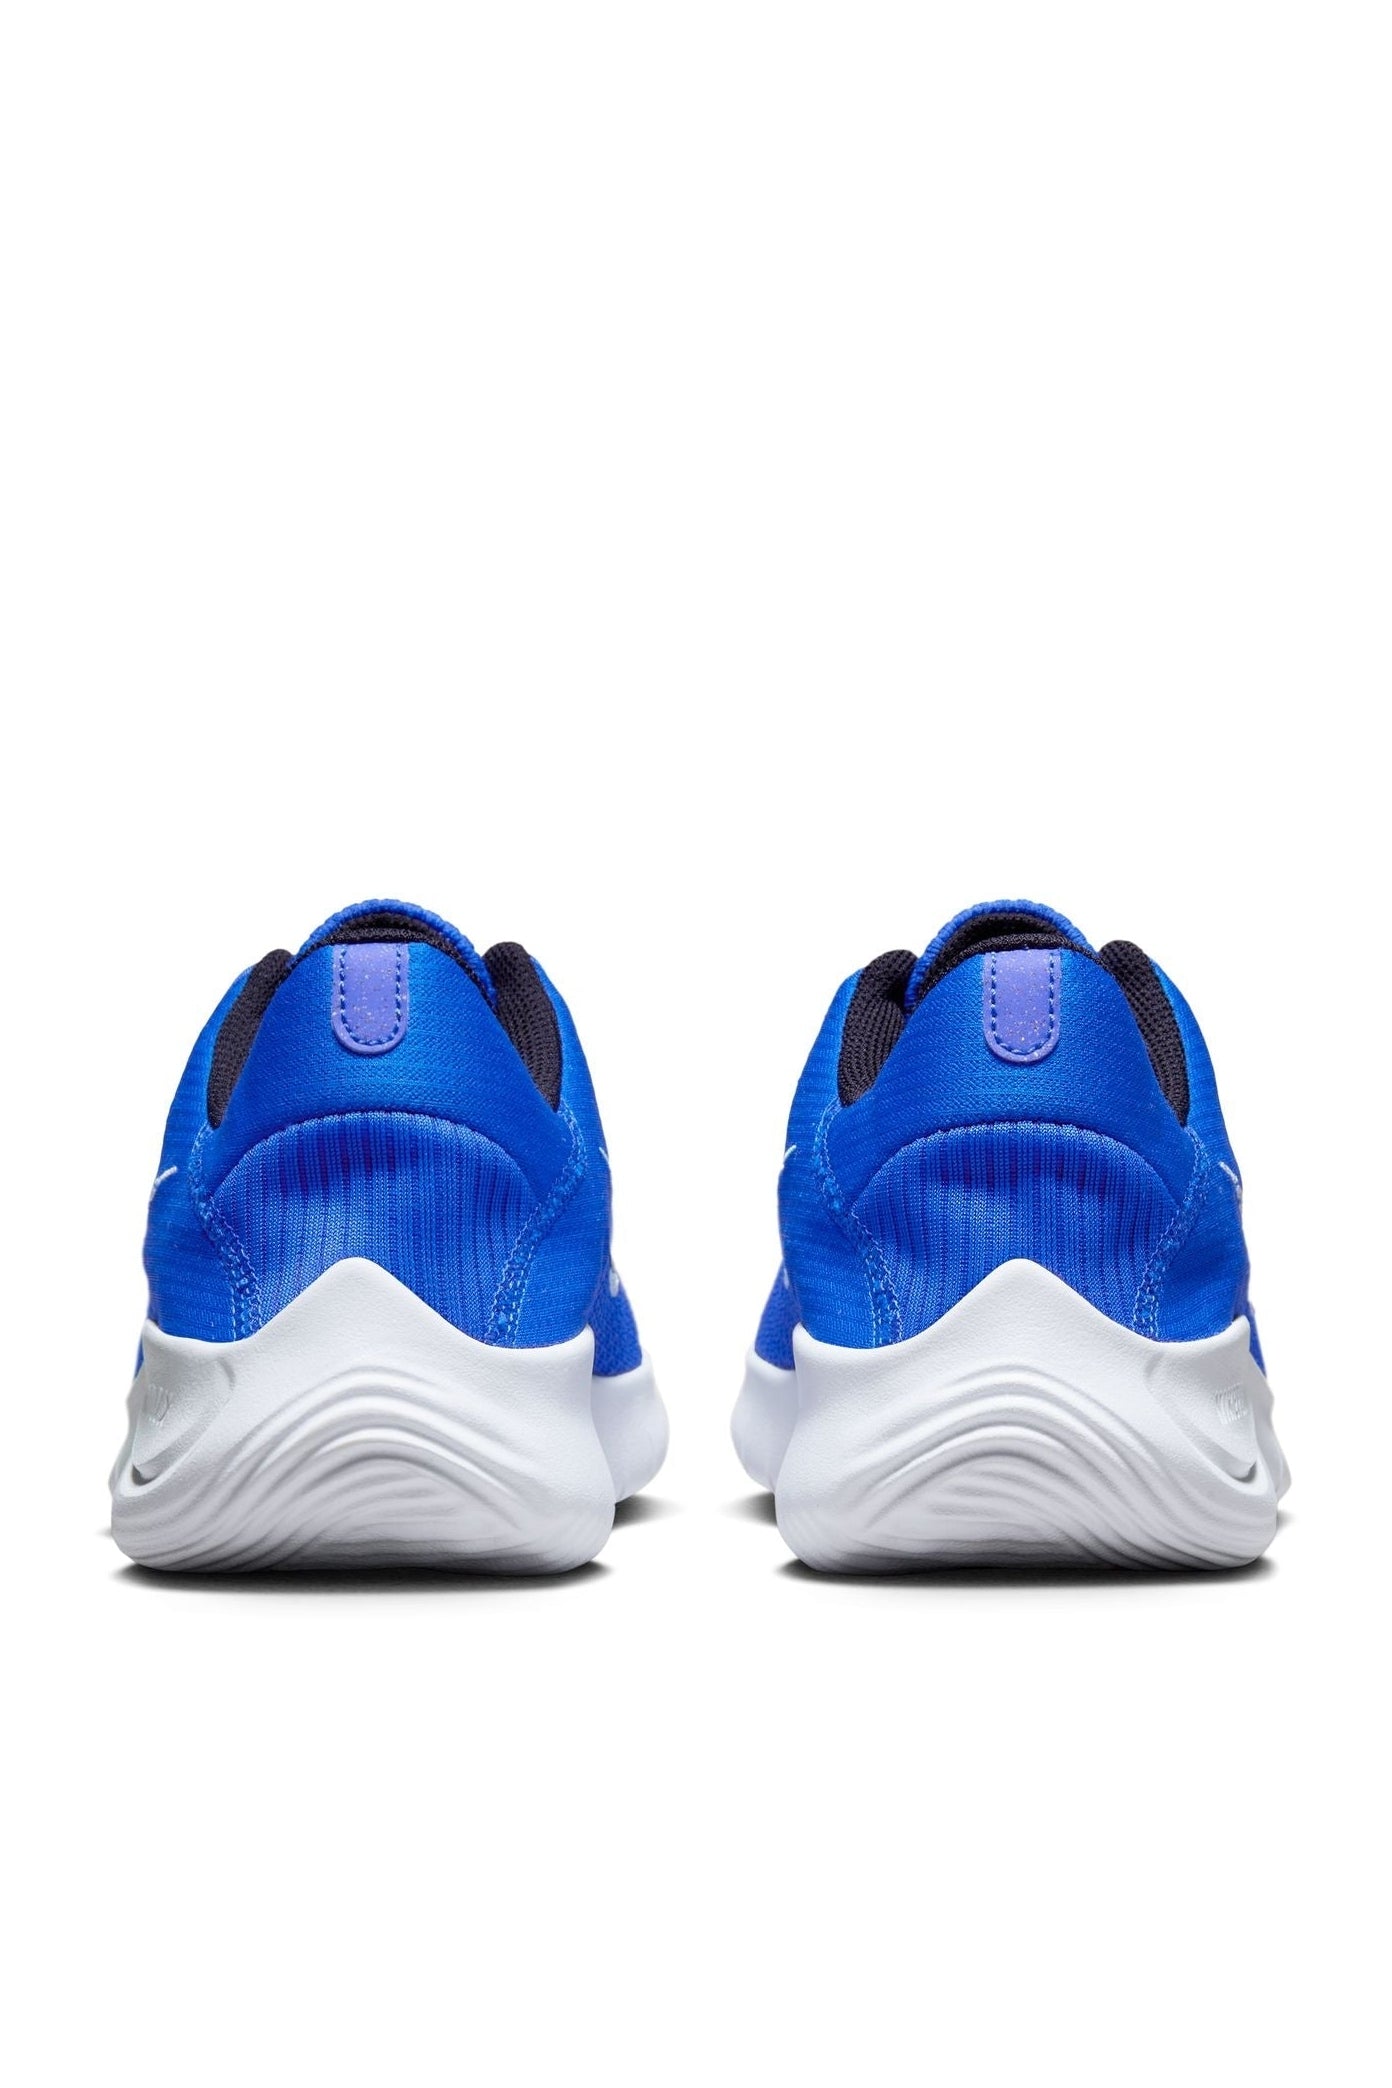 NIKE - נעלי ספורט לגברים Flex Experience Run 11 בצבע כחול - MASHBIR//365